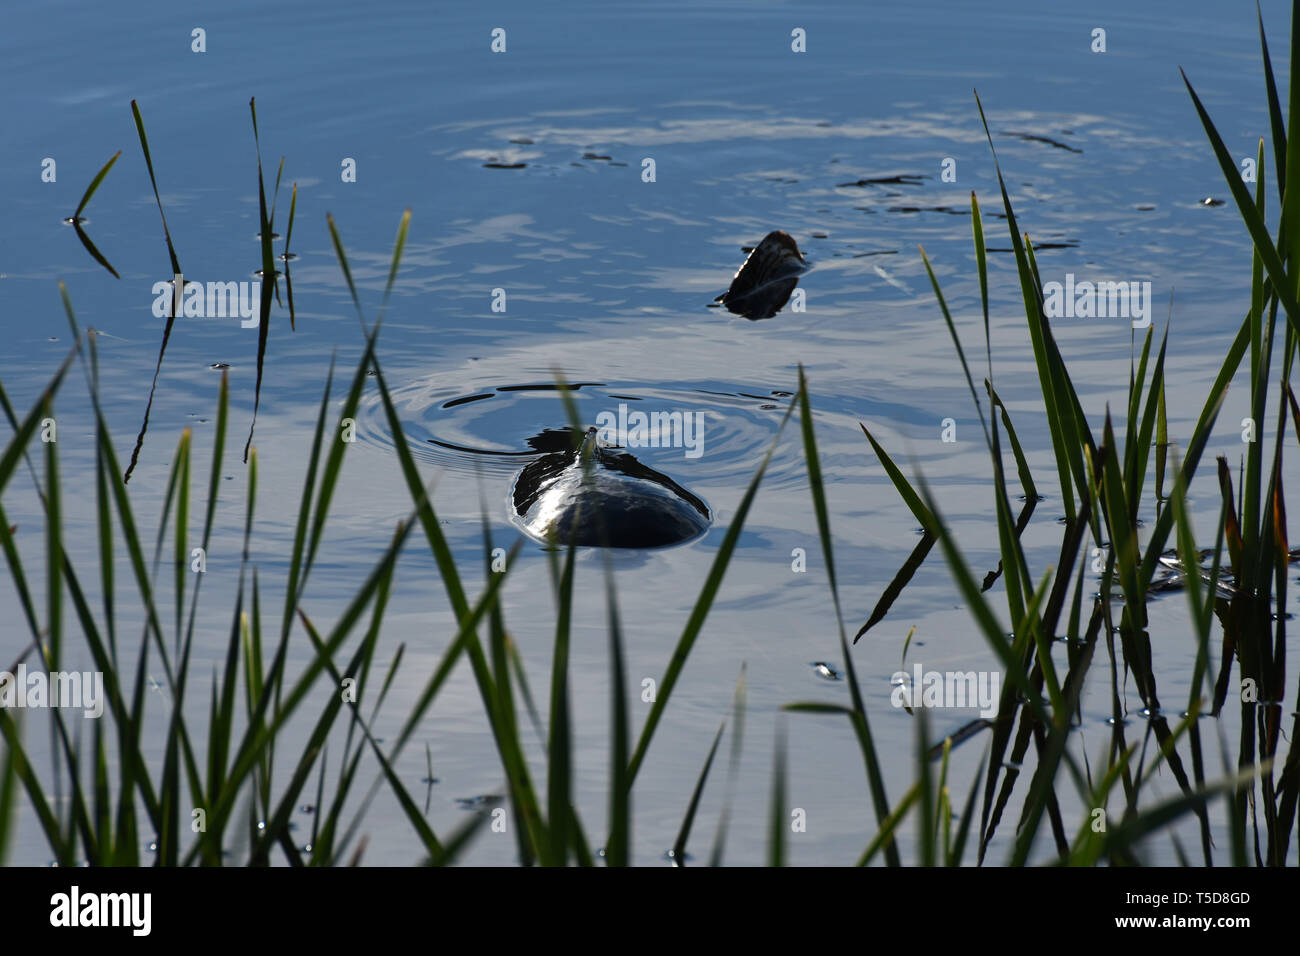 Large Grass Carp Fish Grazing In The Shallows (ctenopharyngodon idella) Stock Photo